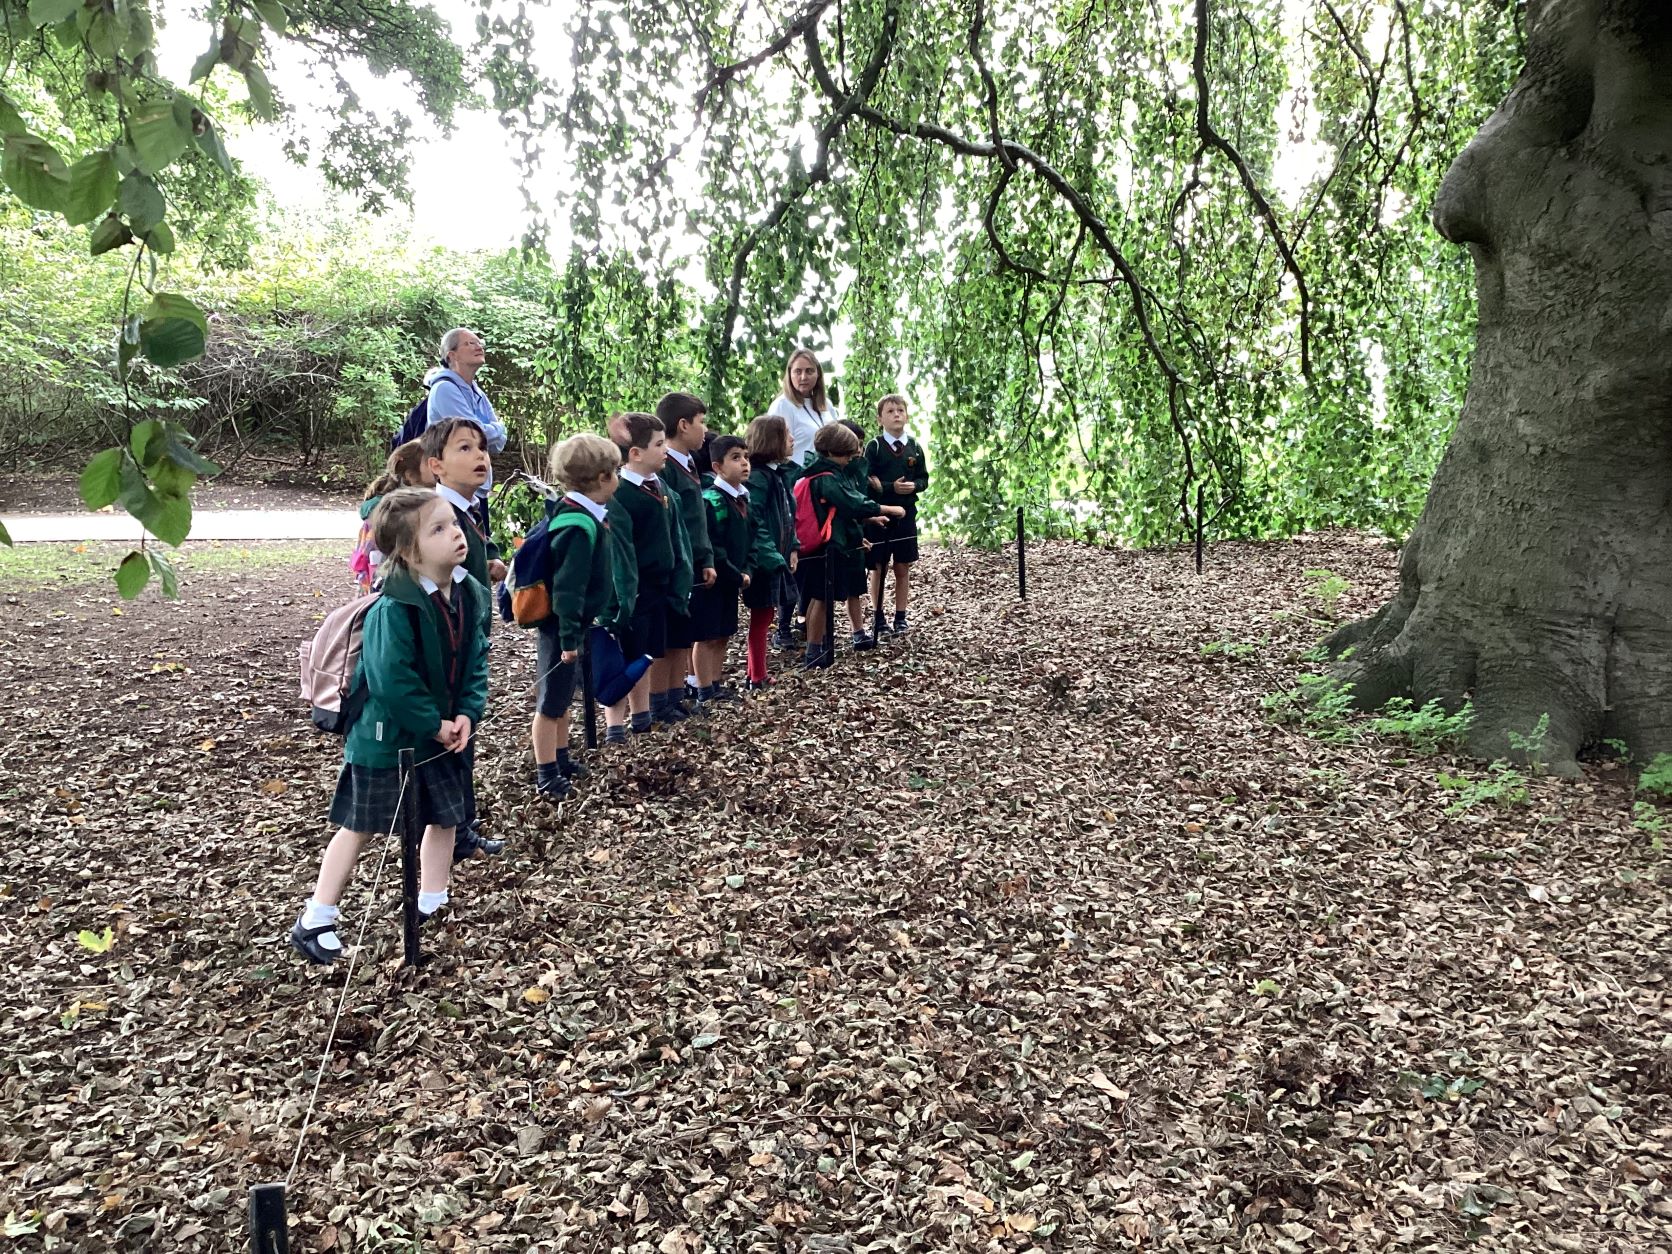 St Benedict's Year 2 children visit Kew Gardens